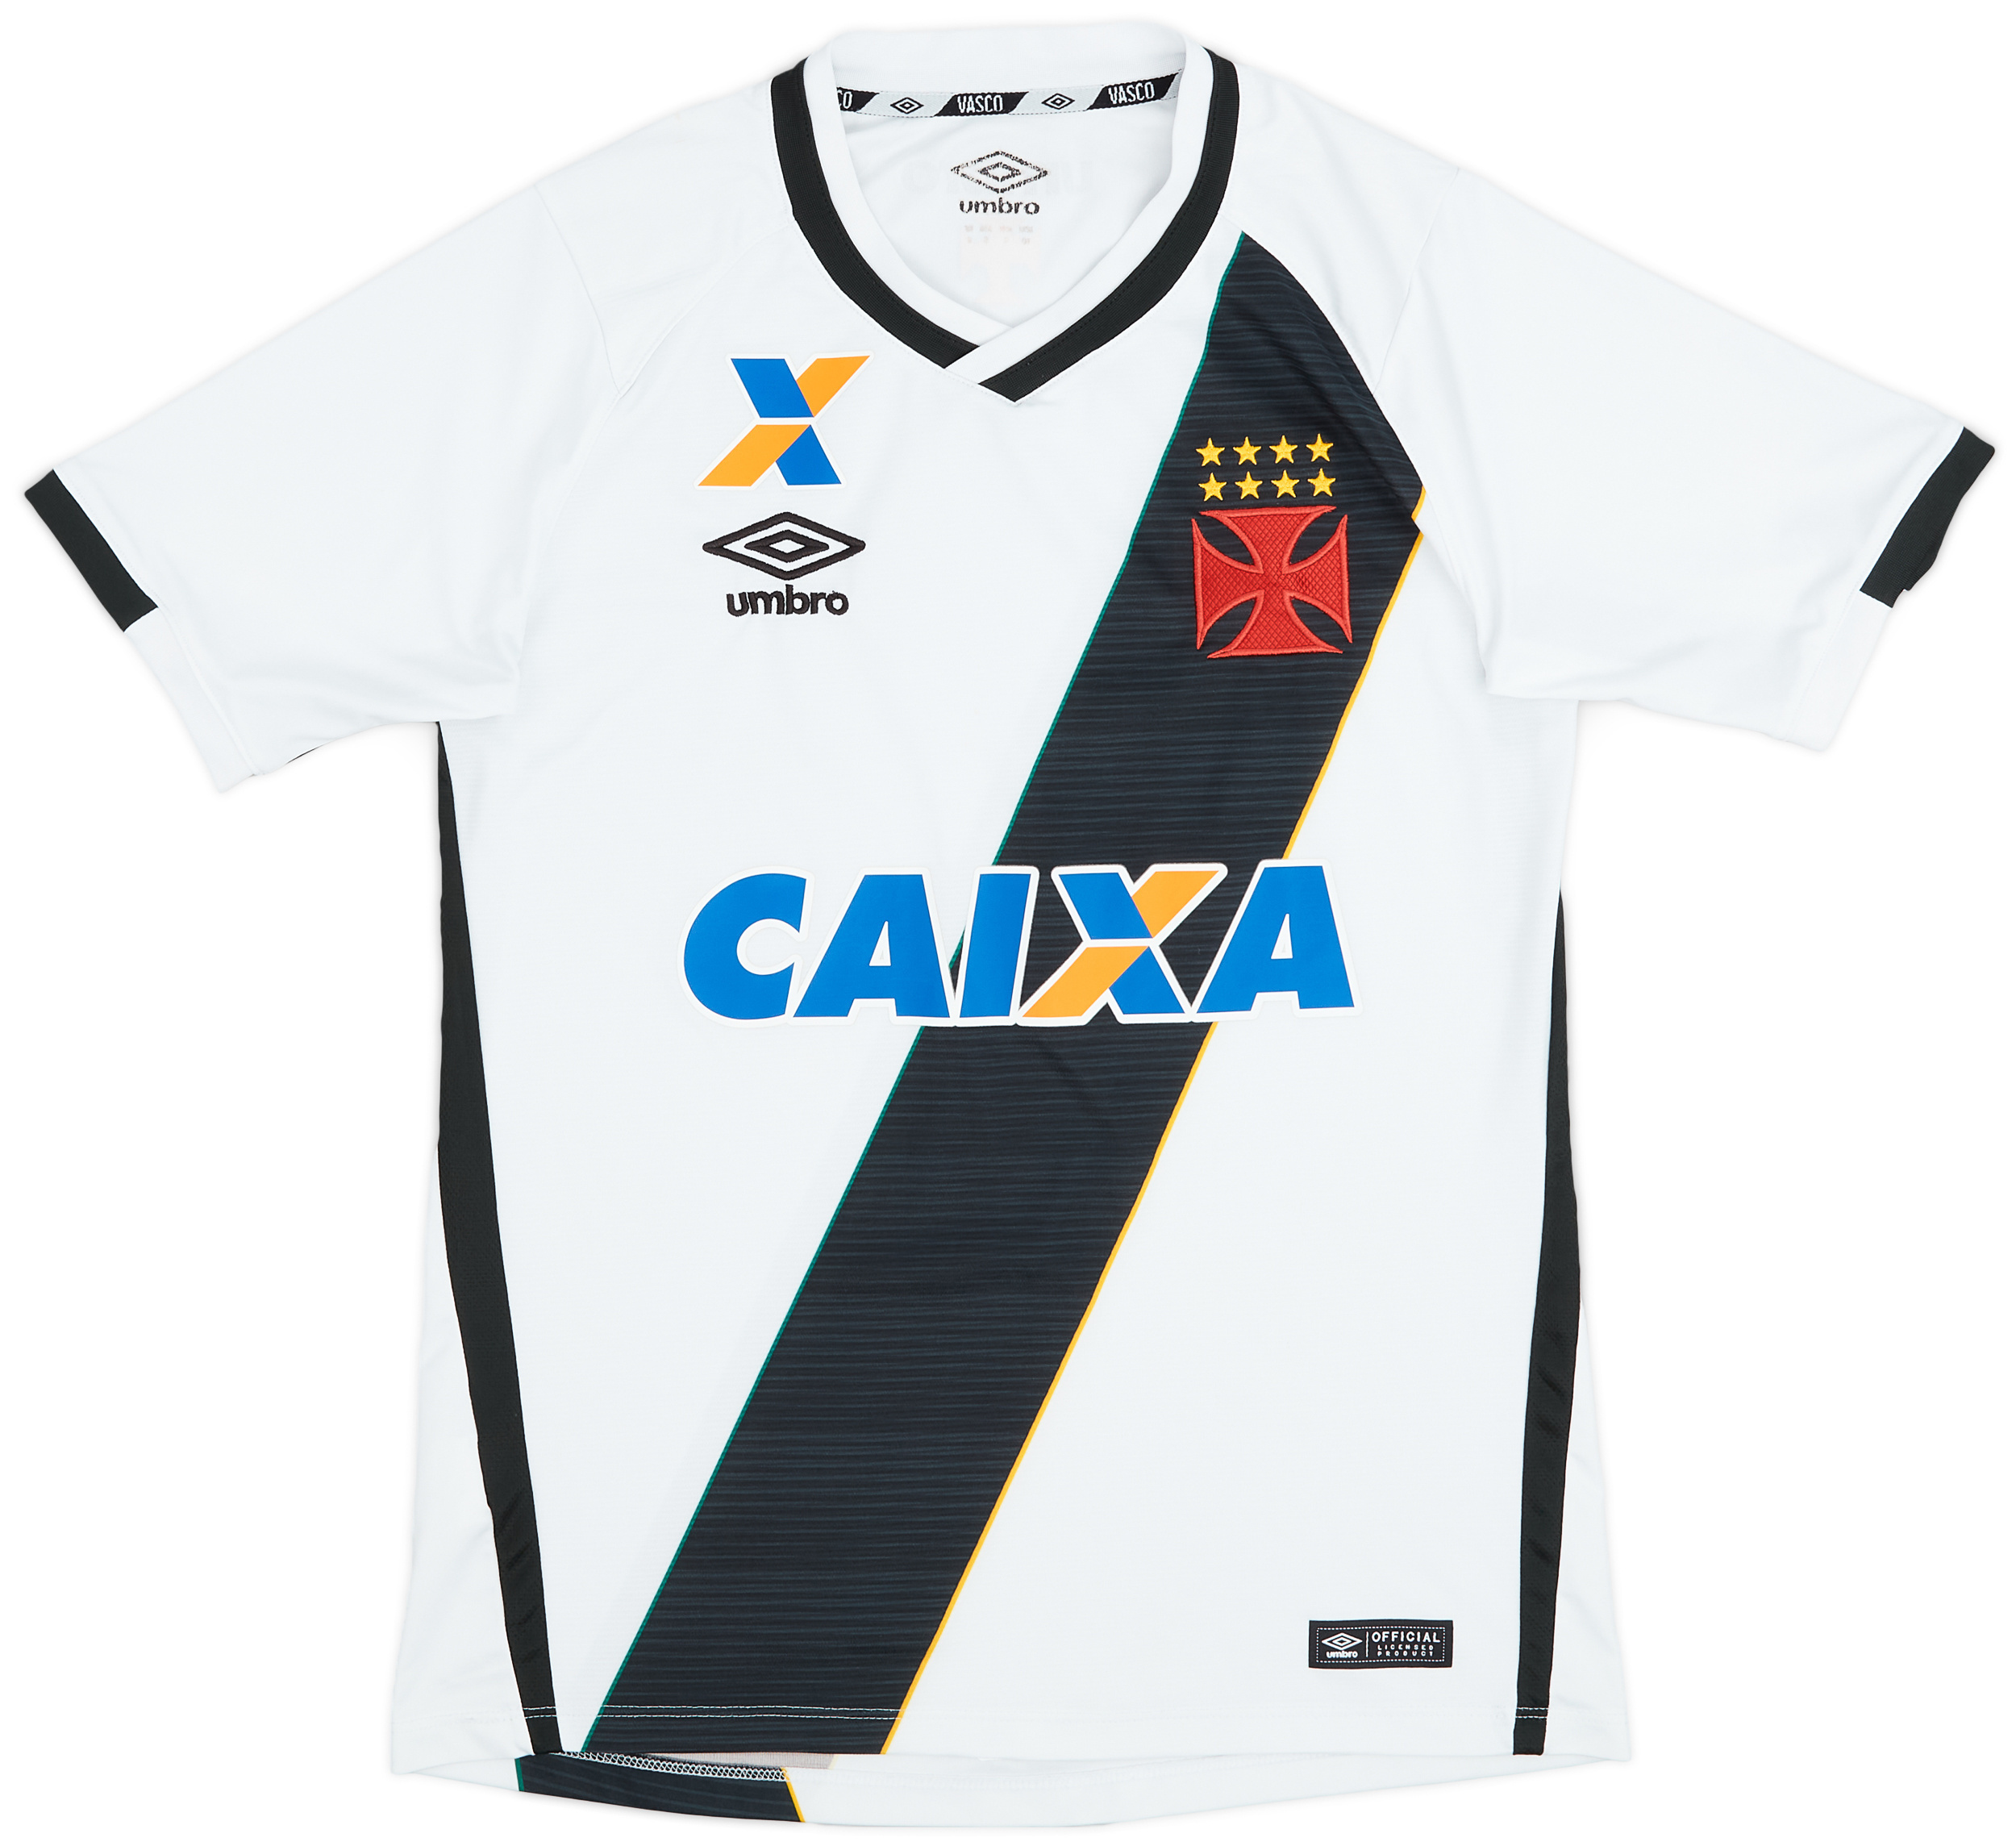 Vasco da Gama  Fora camisa (Original)